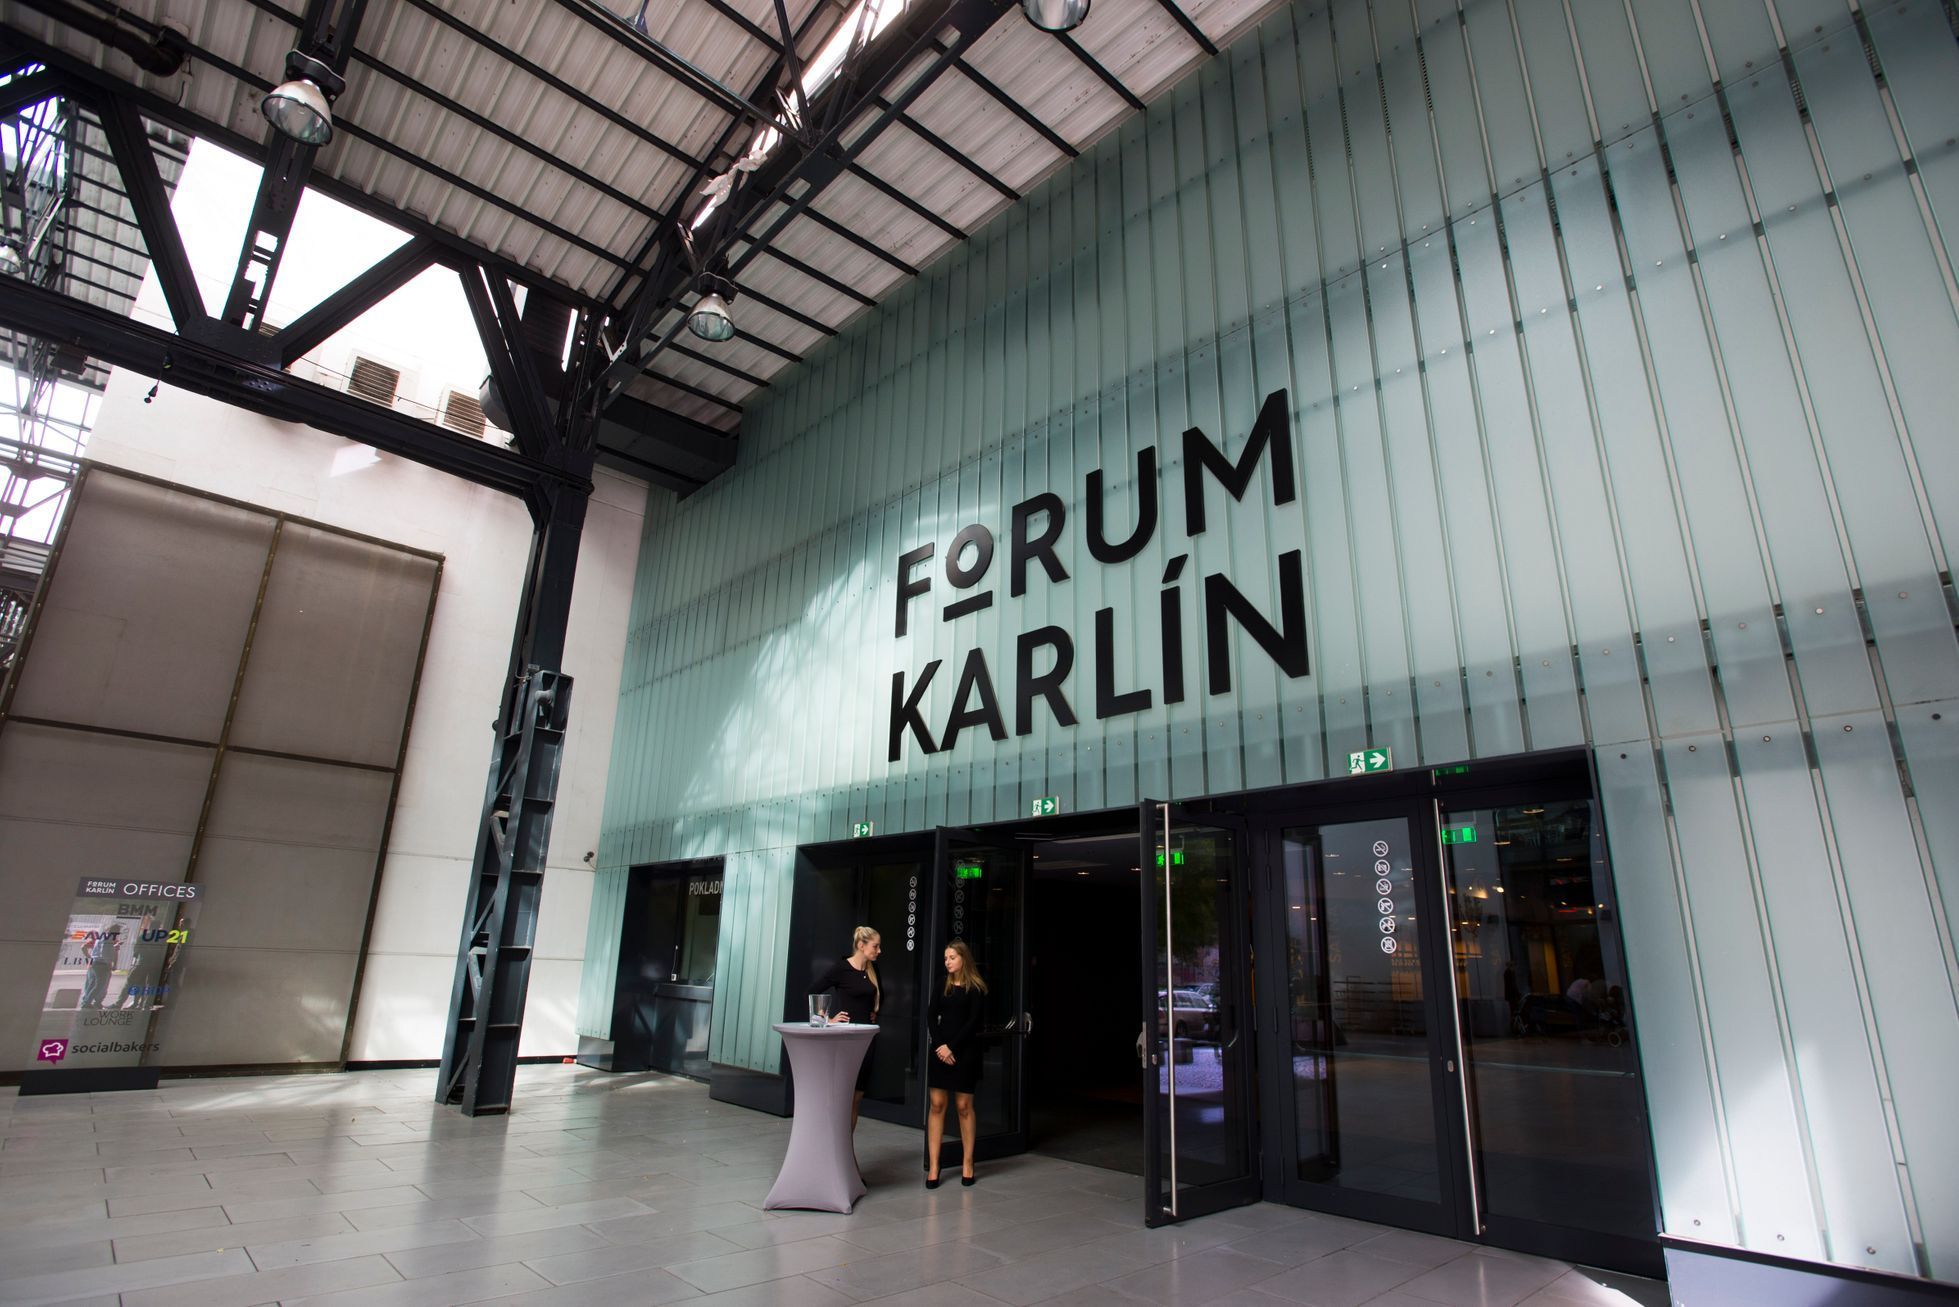 Forum Karlín